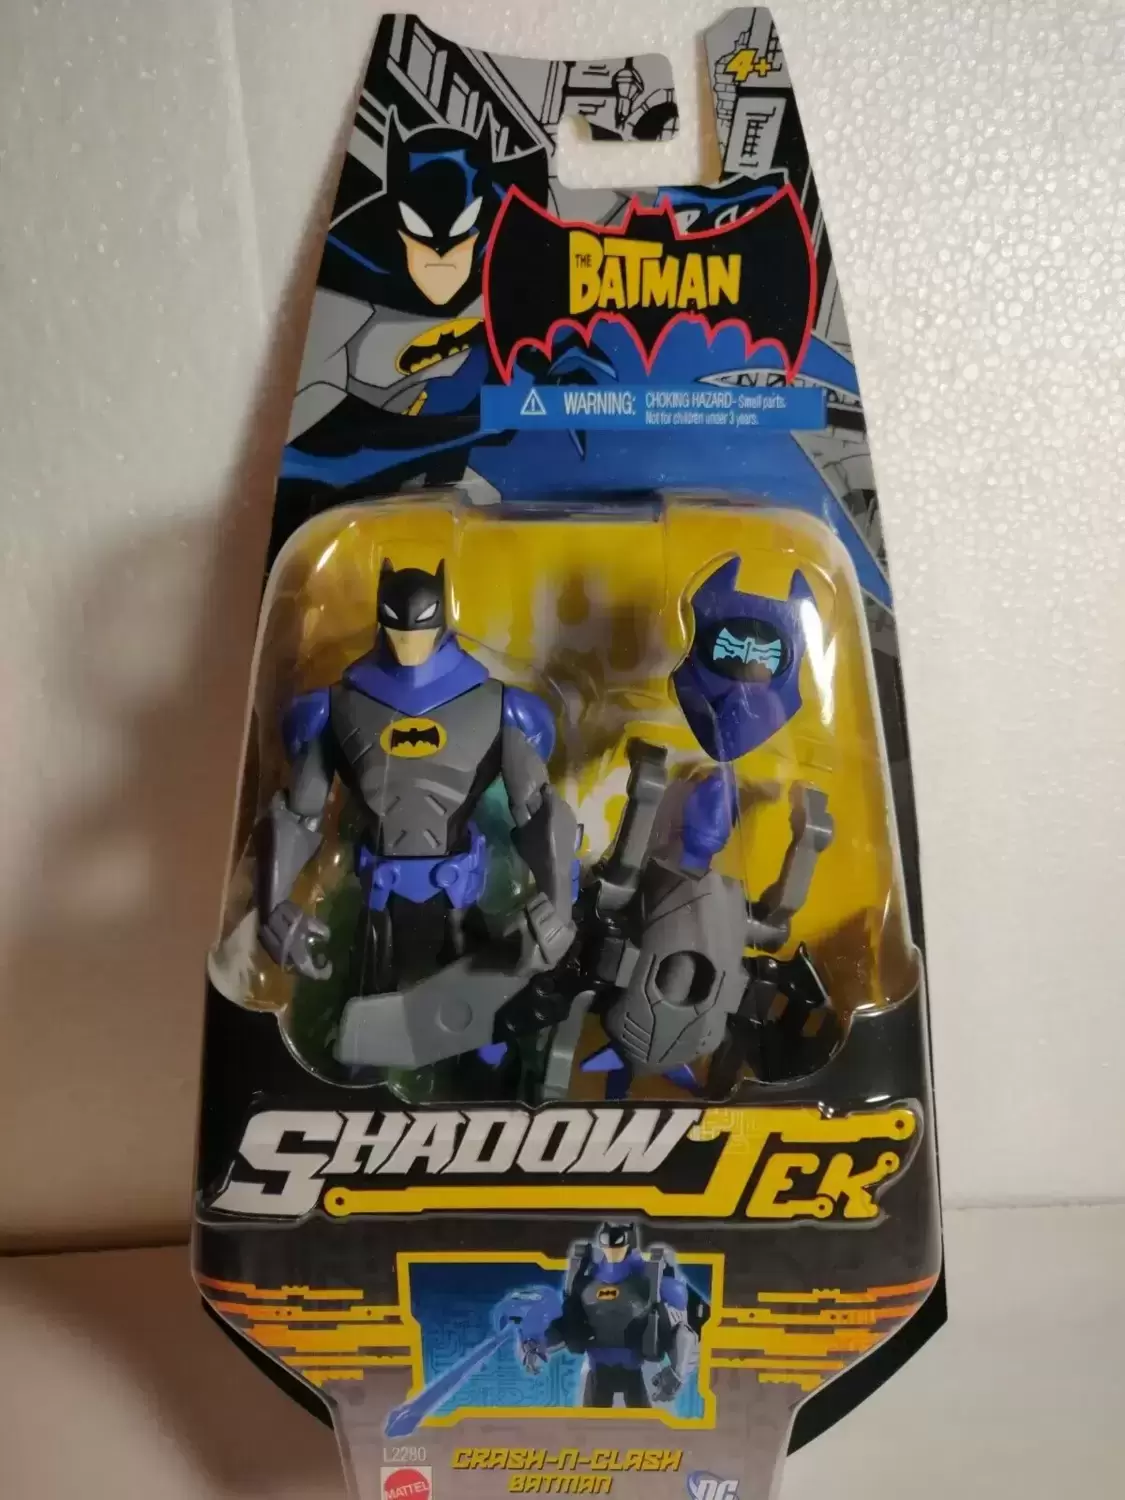 The Batman - Shadow Tek - Crash n Clash Batman